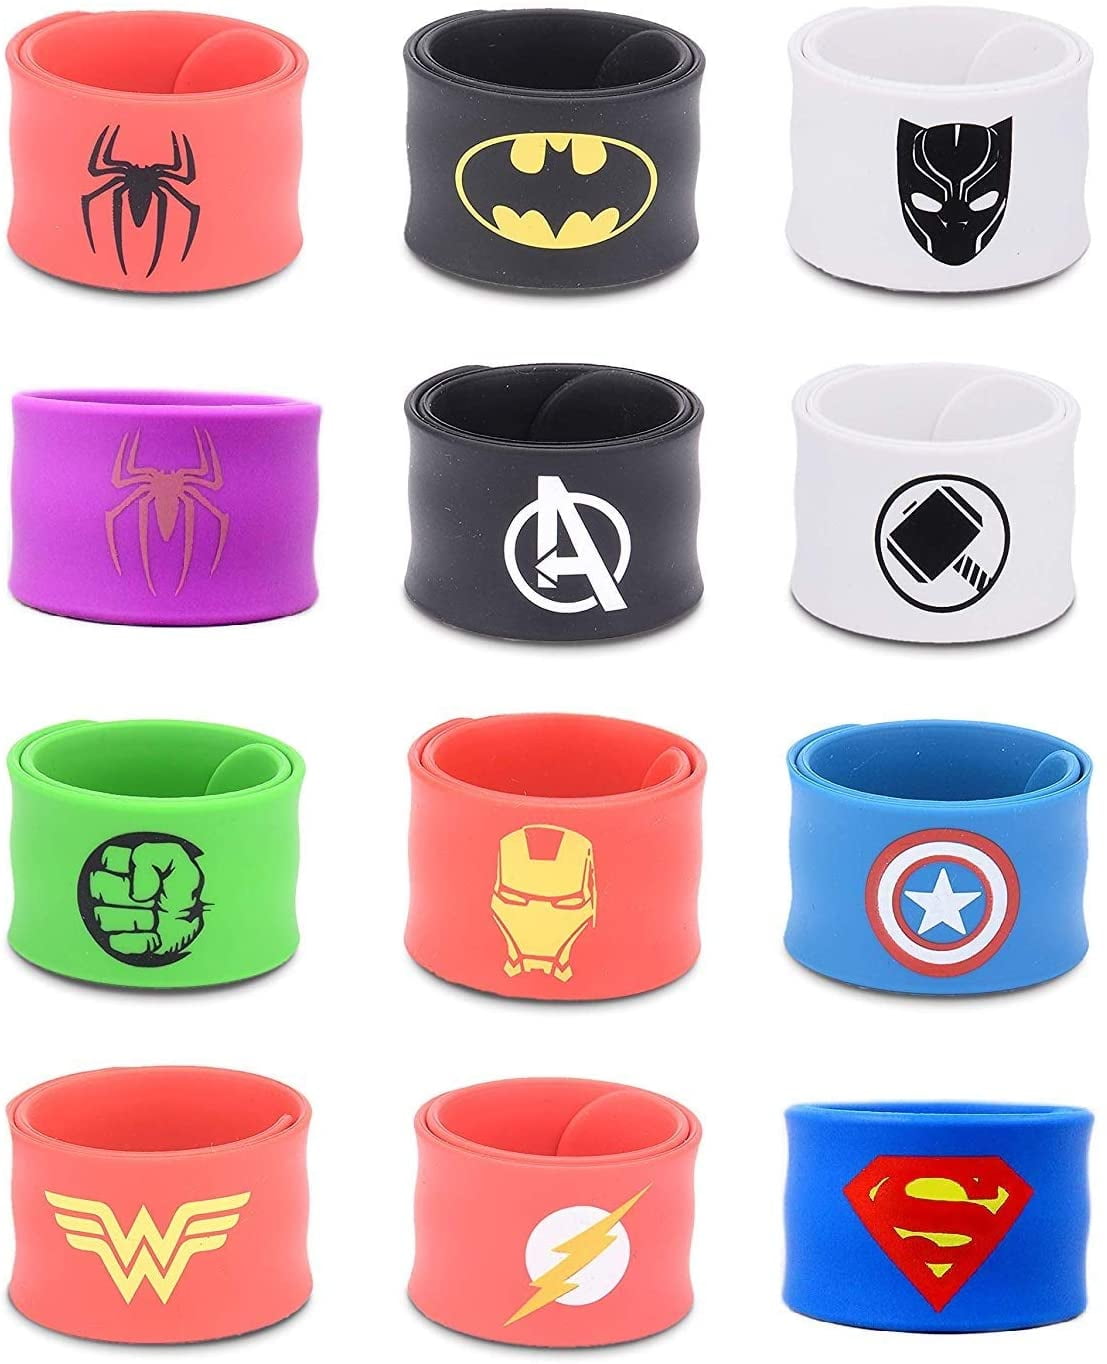 10 Superhero Slap Bracelets Party Favors for Kids Boys Birthday Party Supplies Superhero Bracelet 10 Pack Wristband Accessories Kids Party Supplies